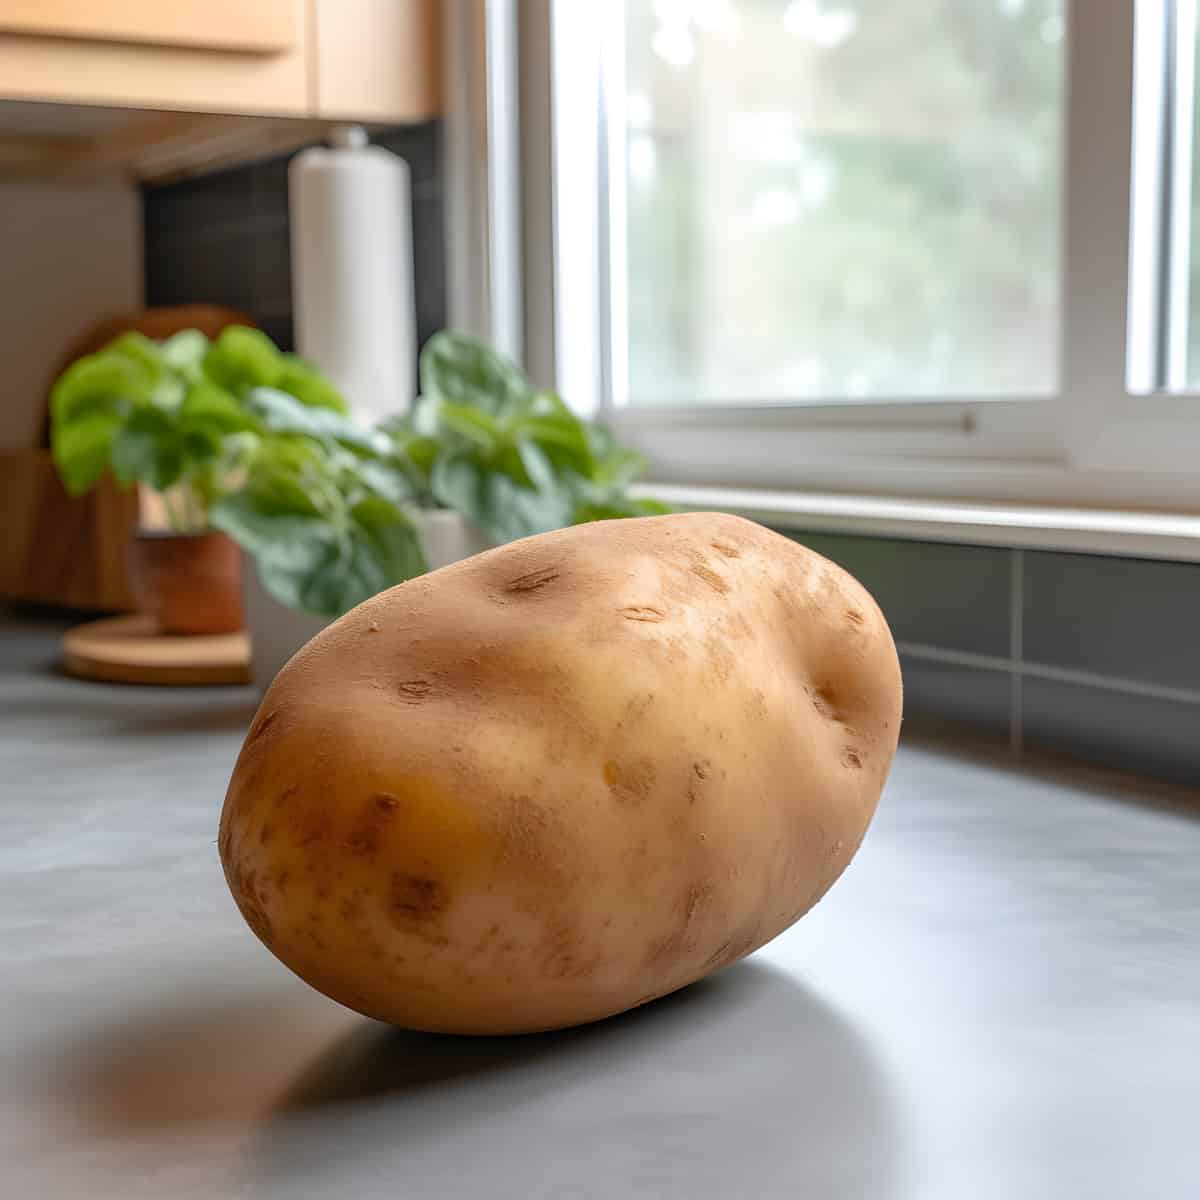 Russet Norkotah Potatoes on a kitchen counter